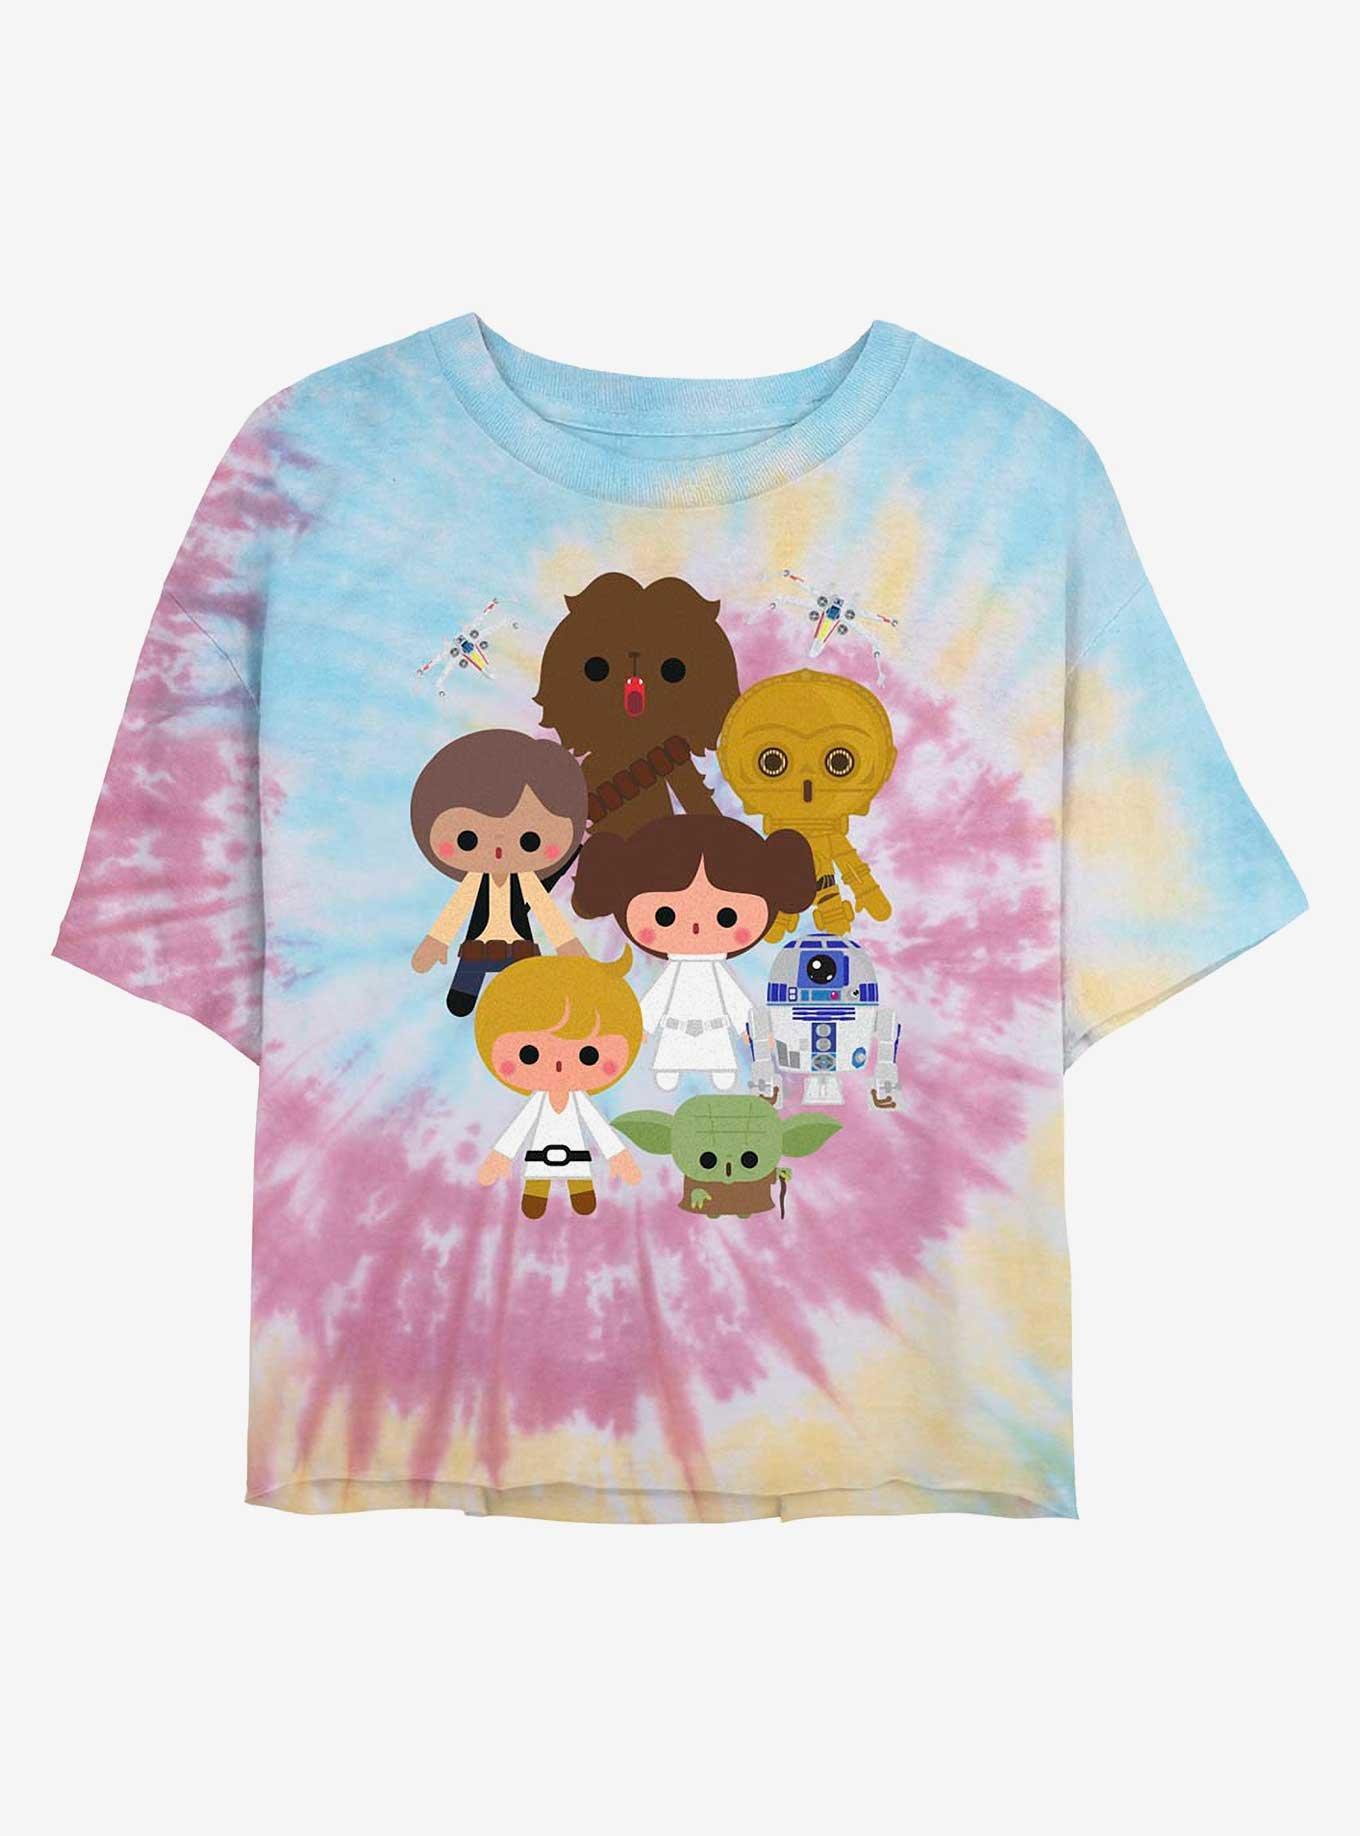 Star Wars Heroes Kawaii Tie Dye Crop Girls T-Shirt